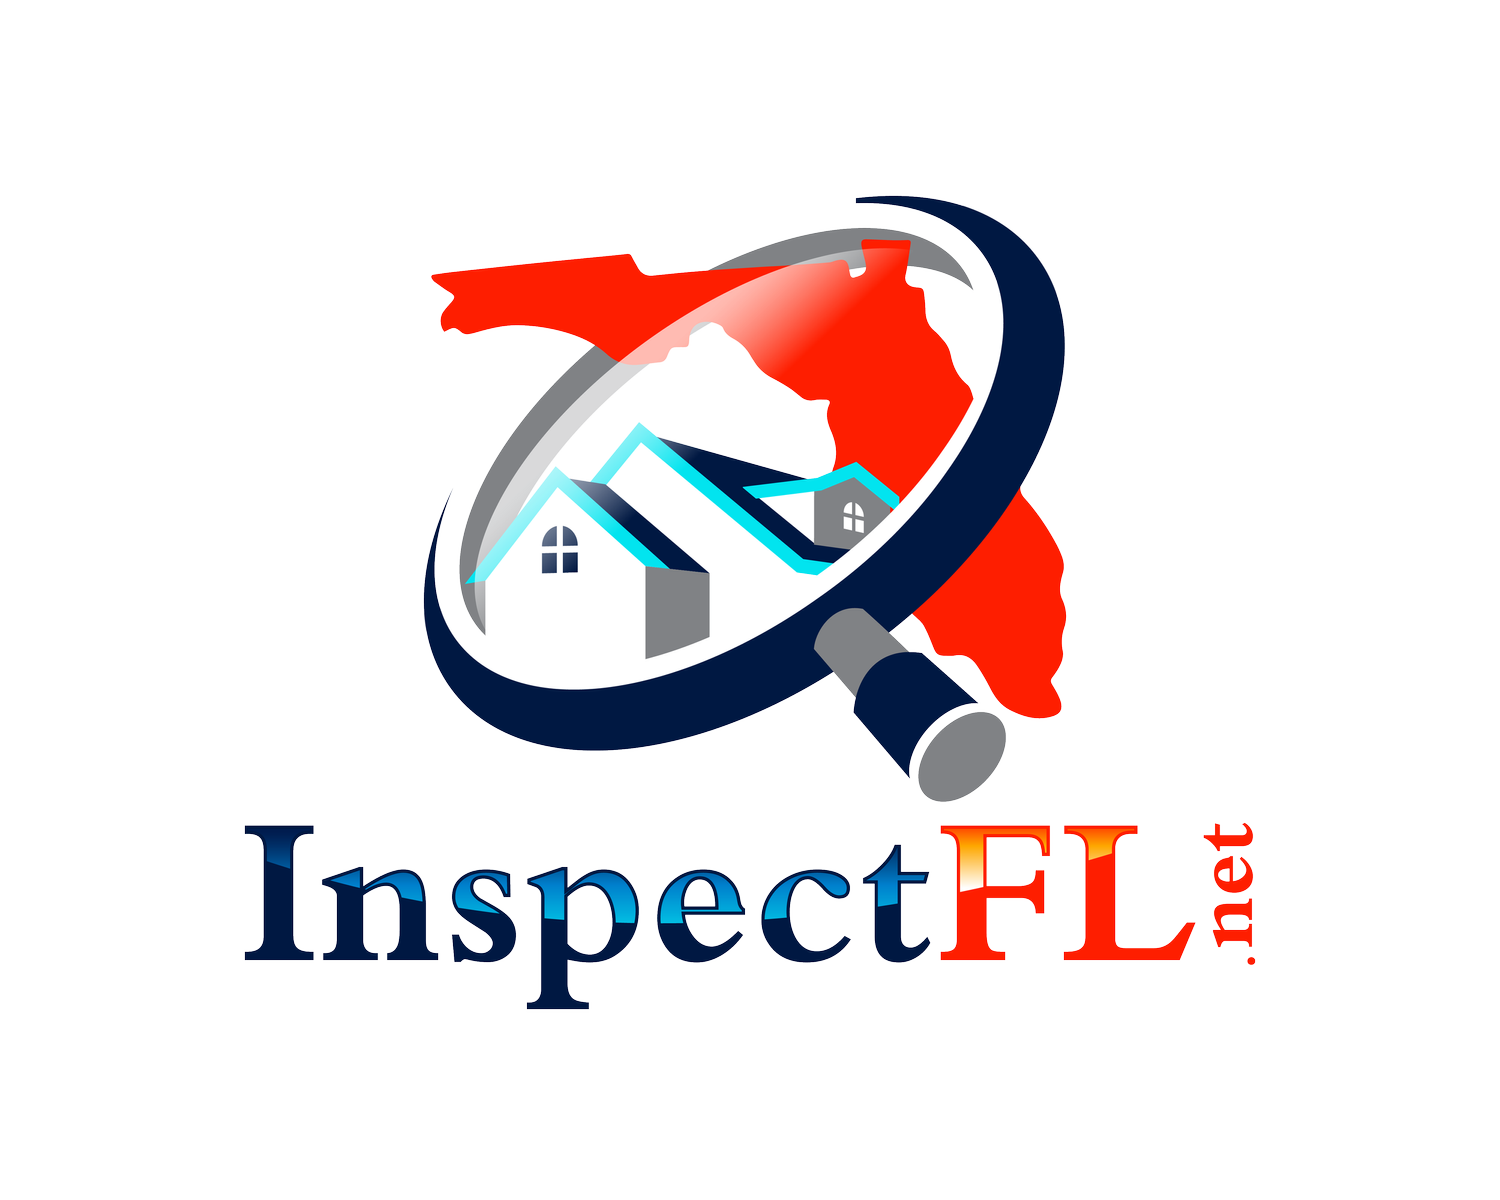 InspectFL